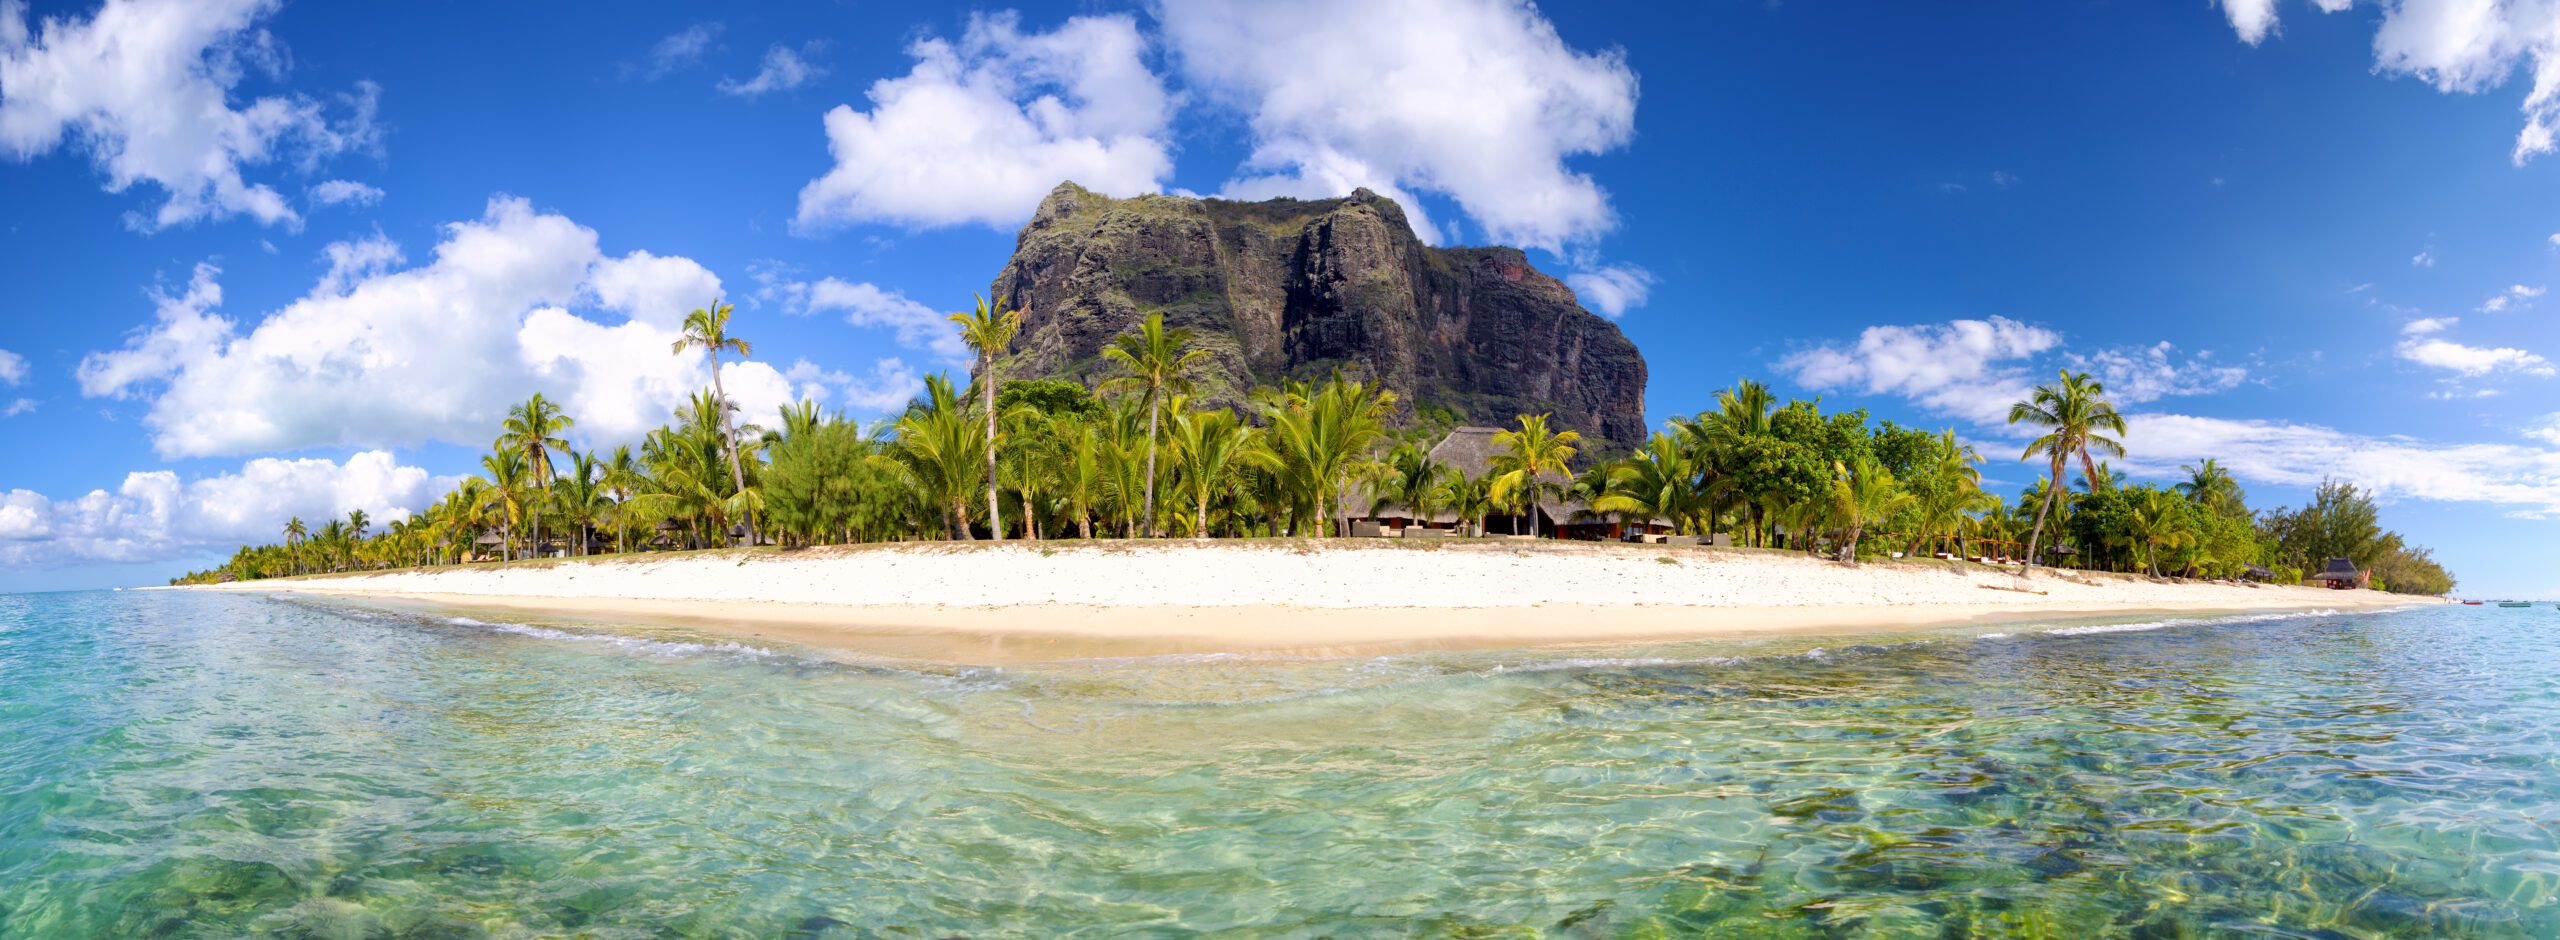 Mauritius Island panorama